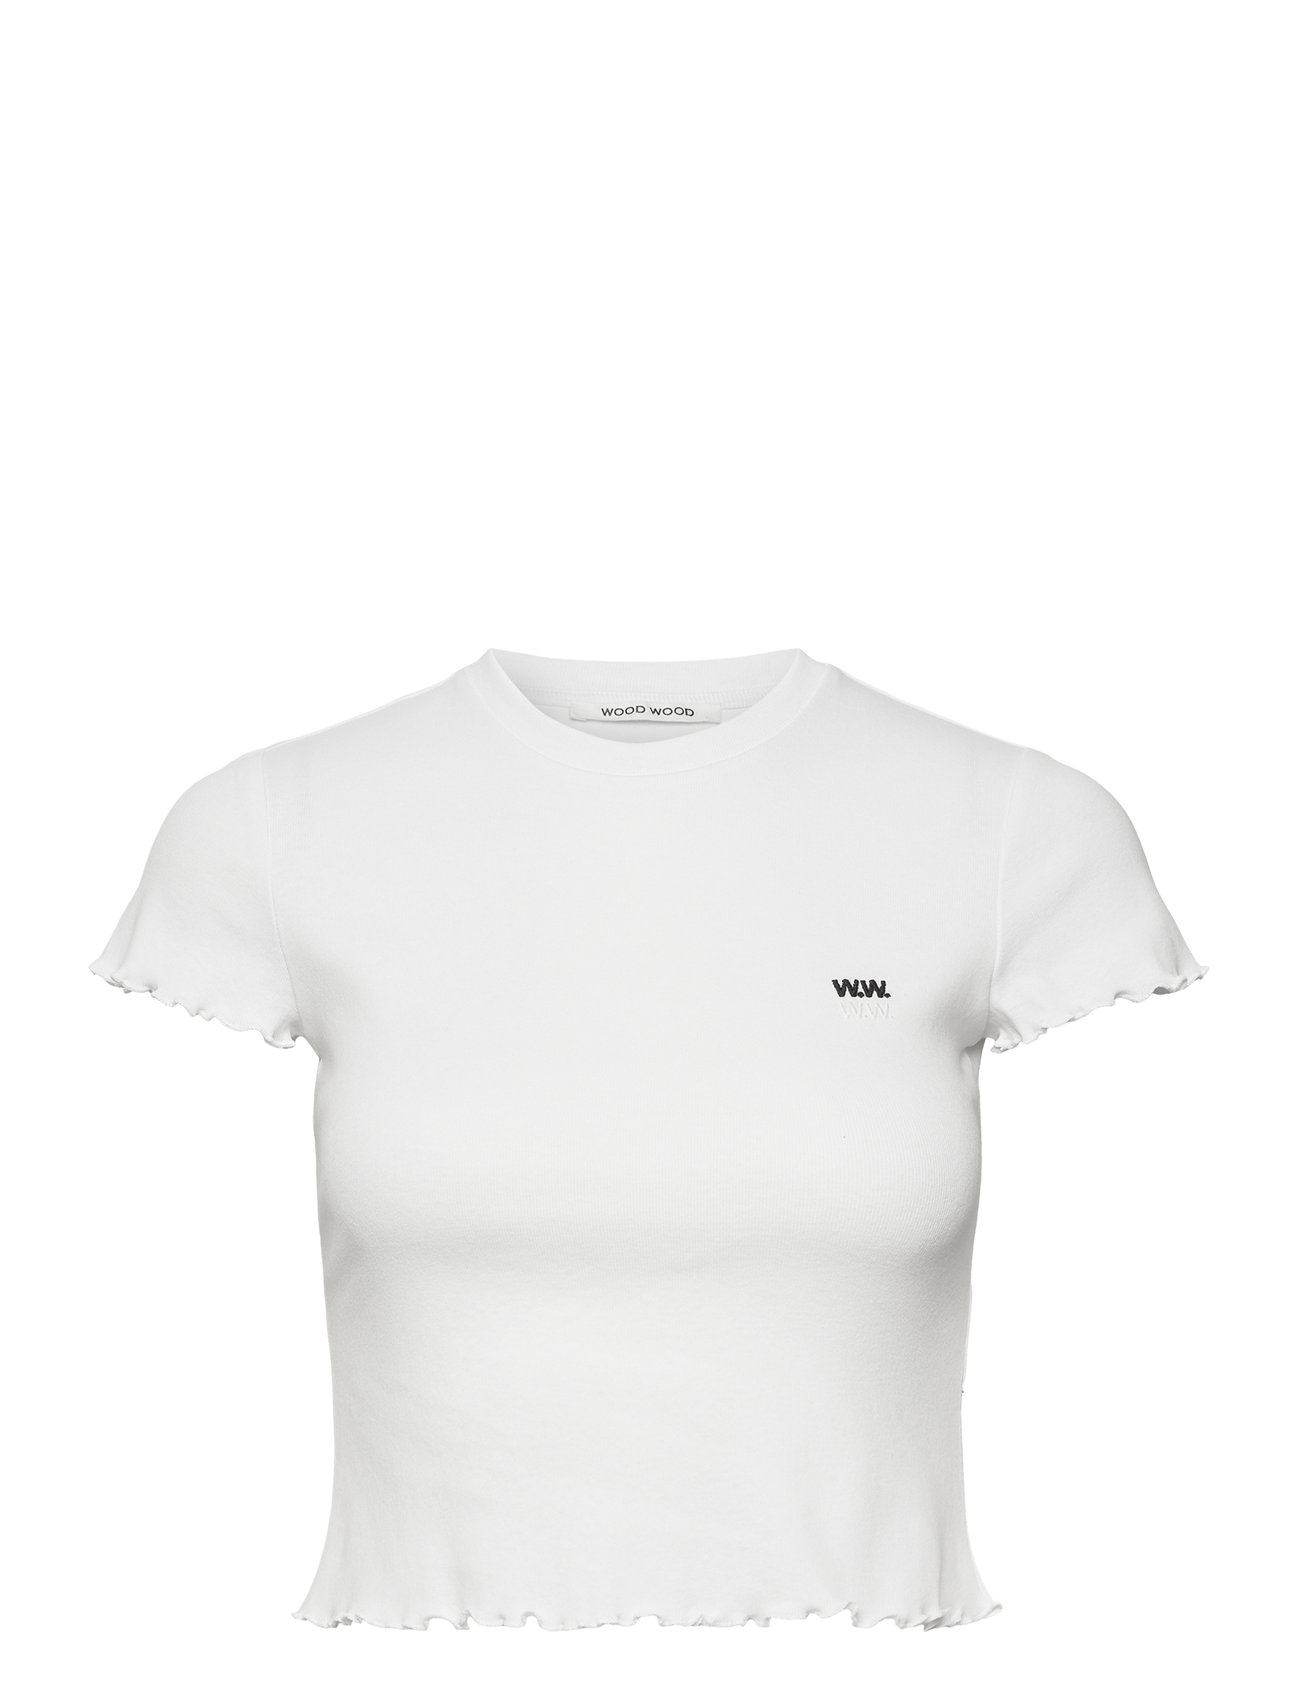 Harley Double Logo T-Shirt Tops Crop Tops Short-sleeved Crop Tops White Wood Wood